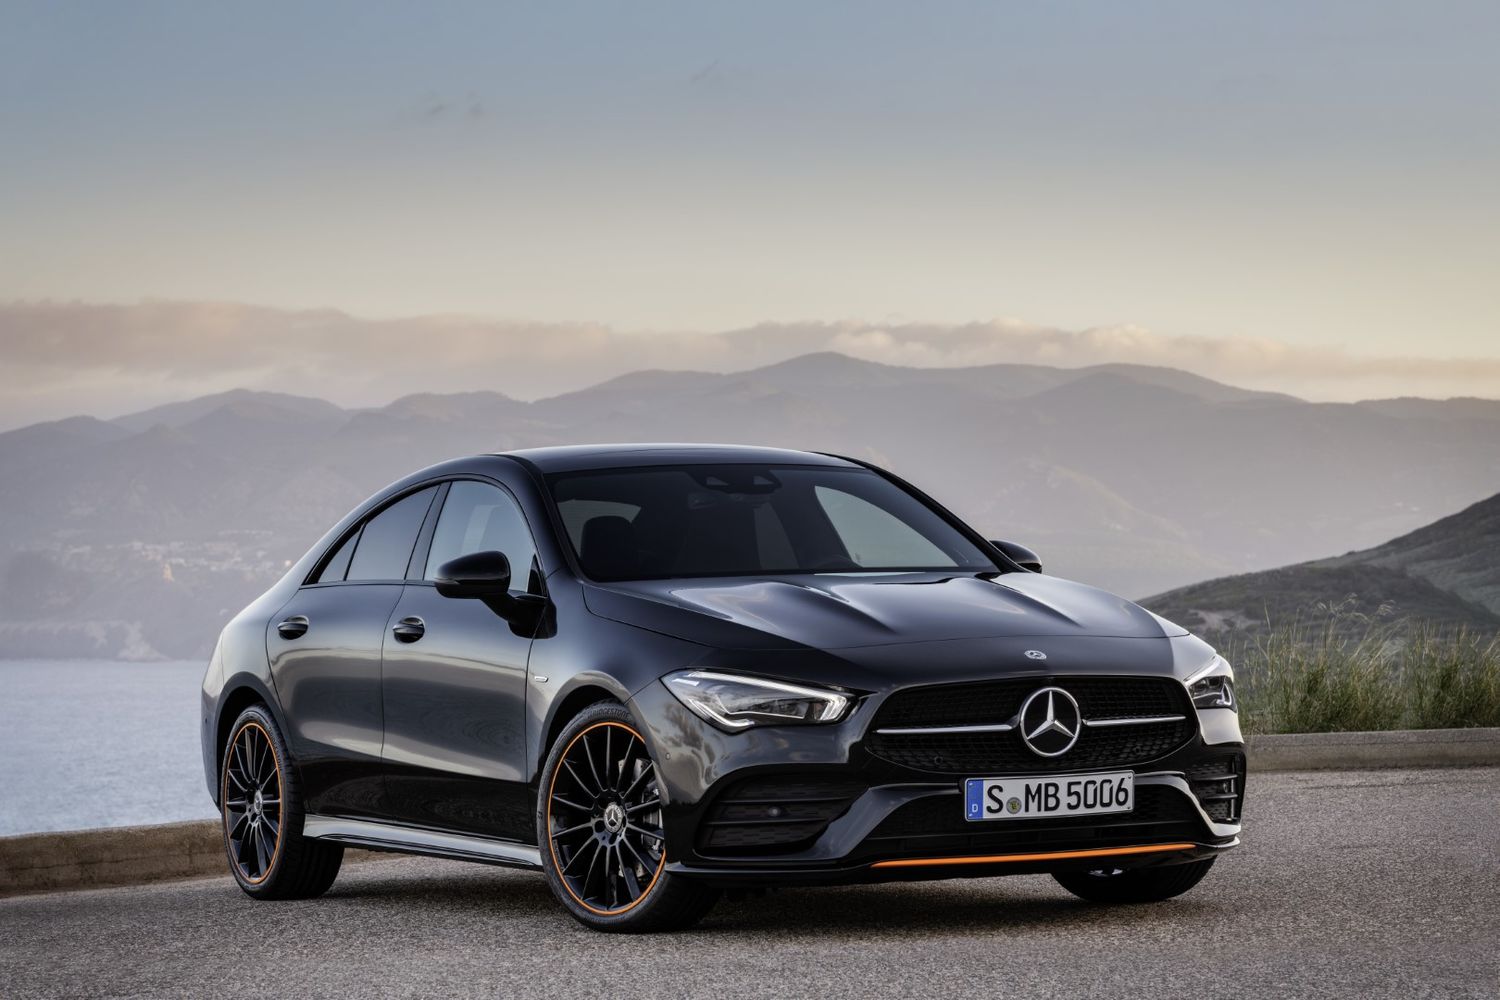 Mercedes-Benz's new 2019 CLA